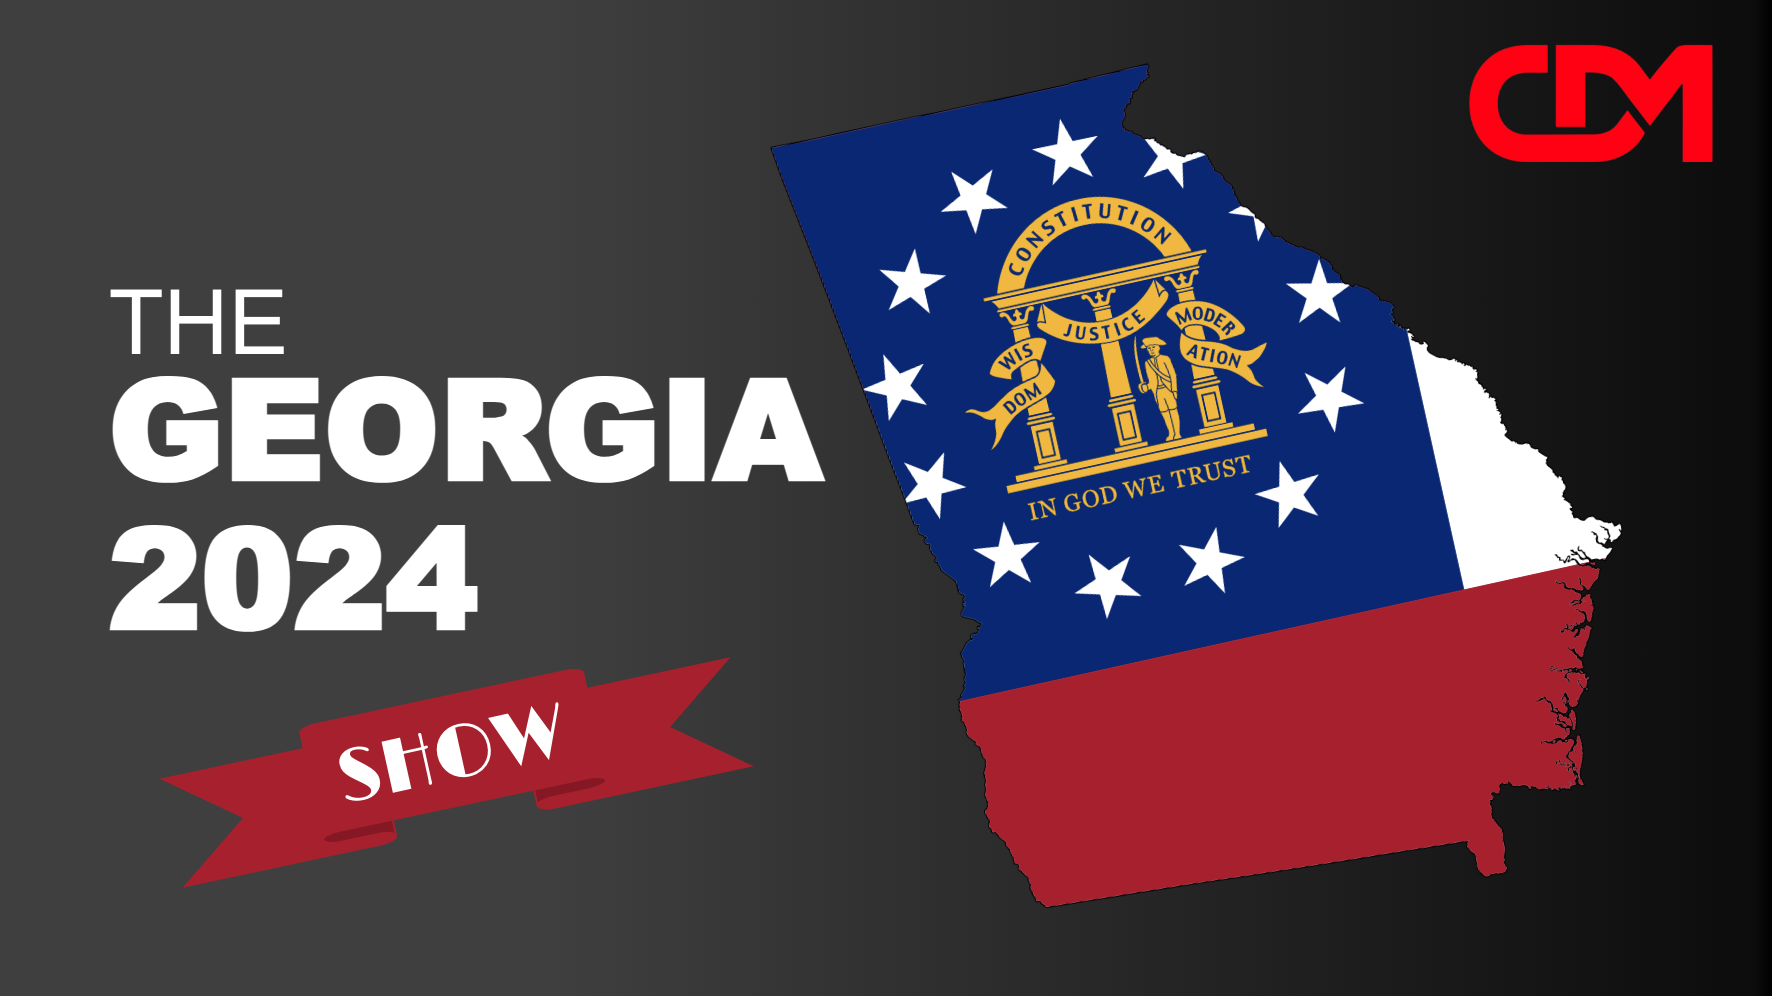 LIVE 7pm EST: The Georgia 2024 Show! With Garland Favorito